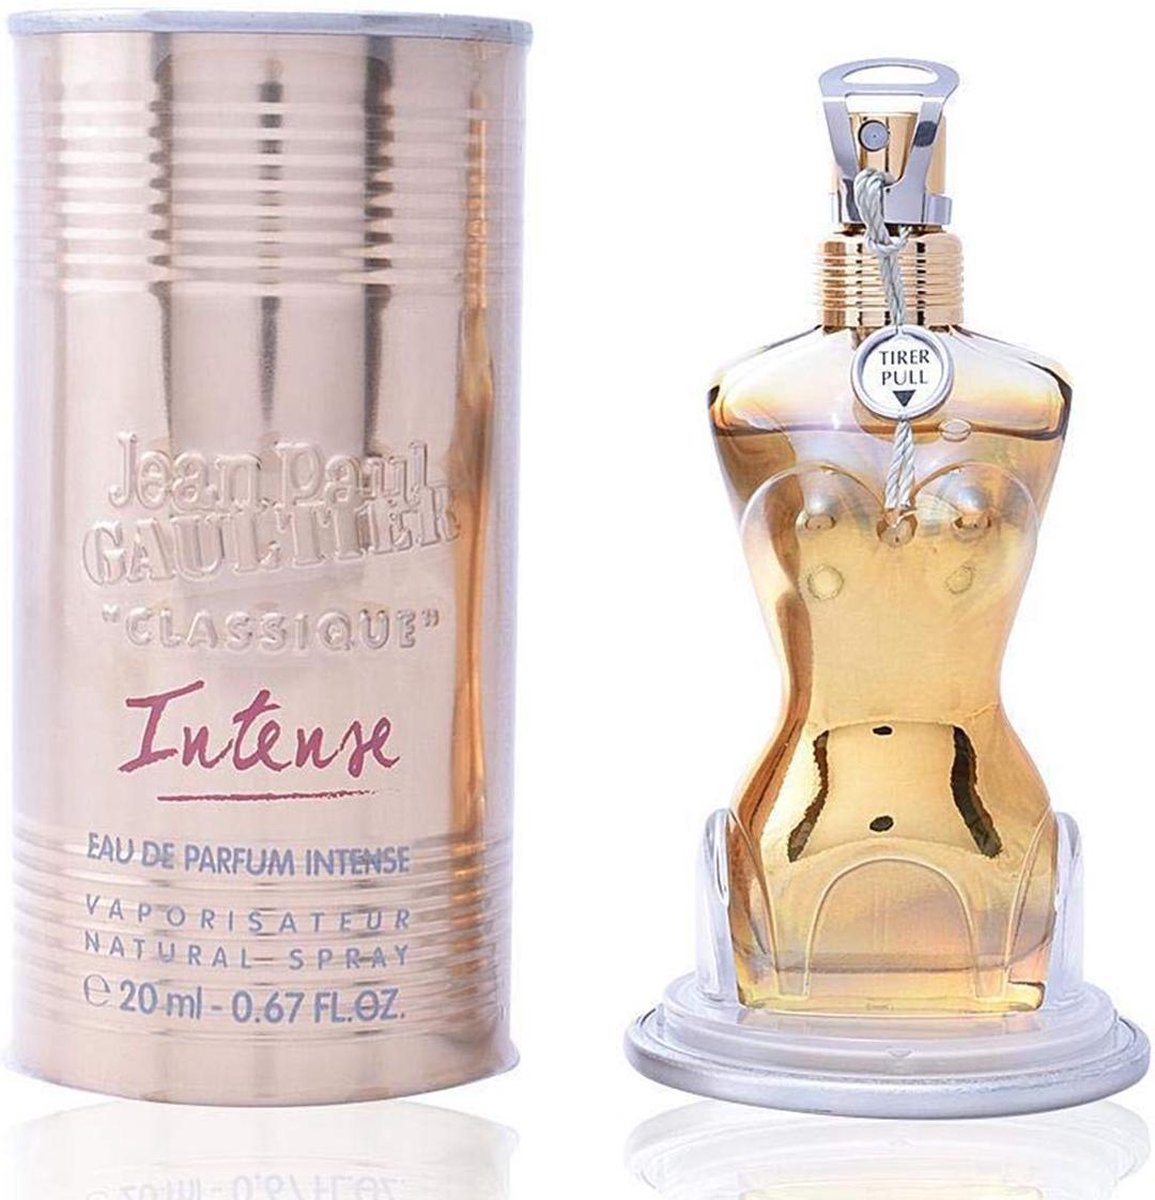 Jean Paul Gaultier Classique Intense Eau de Parfum Spray 20 ml | bol.com